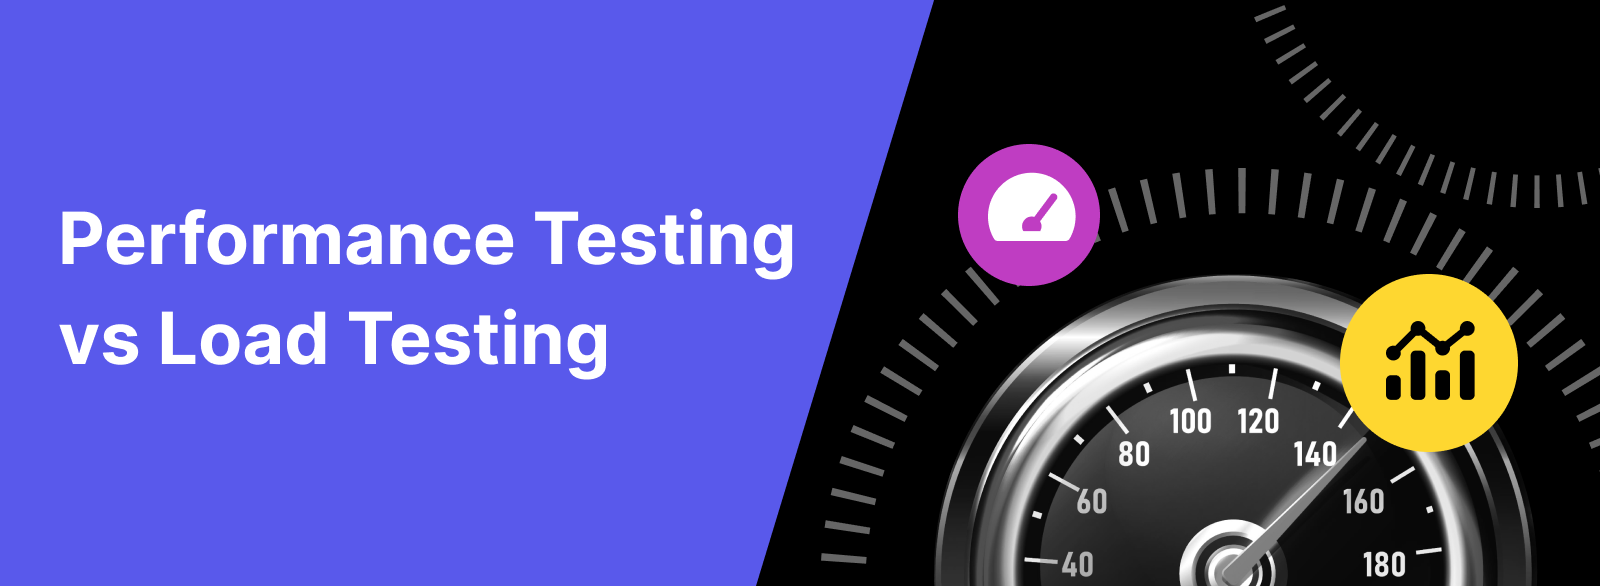 performance testing vs load testing